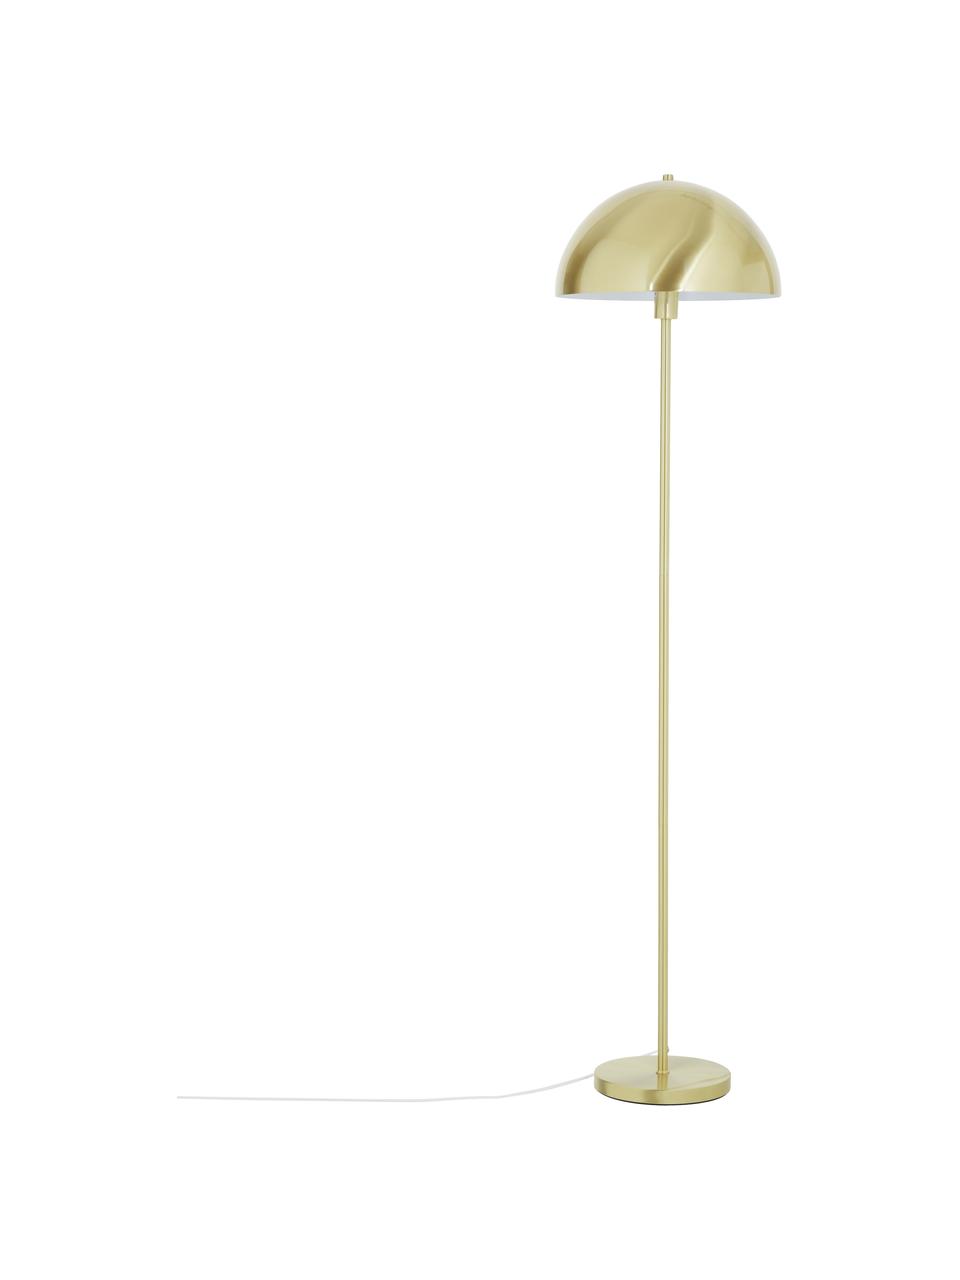 Stehlampe Matilda in Messing, Lampenschirm: Metall, gebürstet, Lampenfuß: Metall, vermessingt, Messingfarben, Ø 40 x H 164 cm